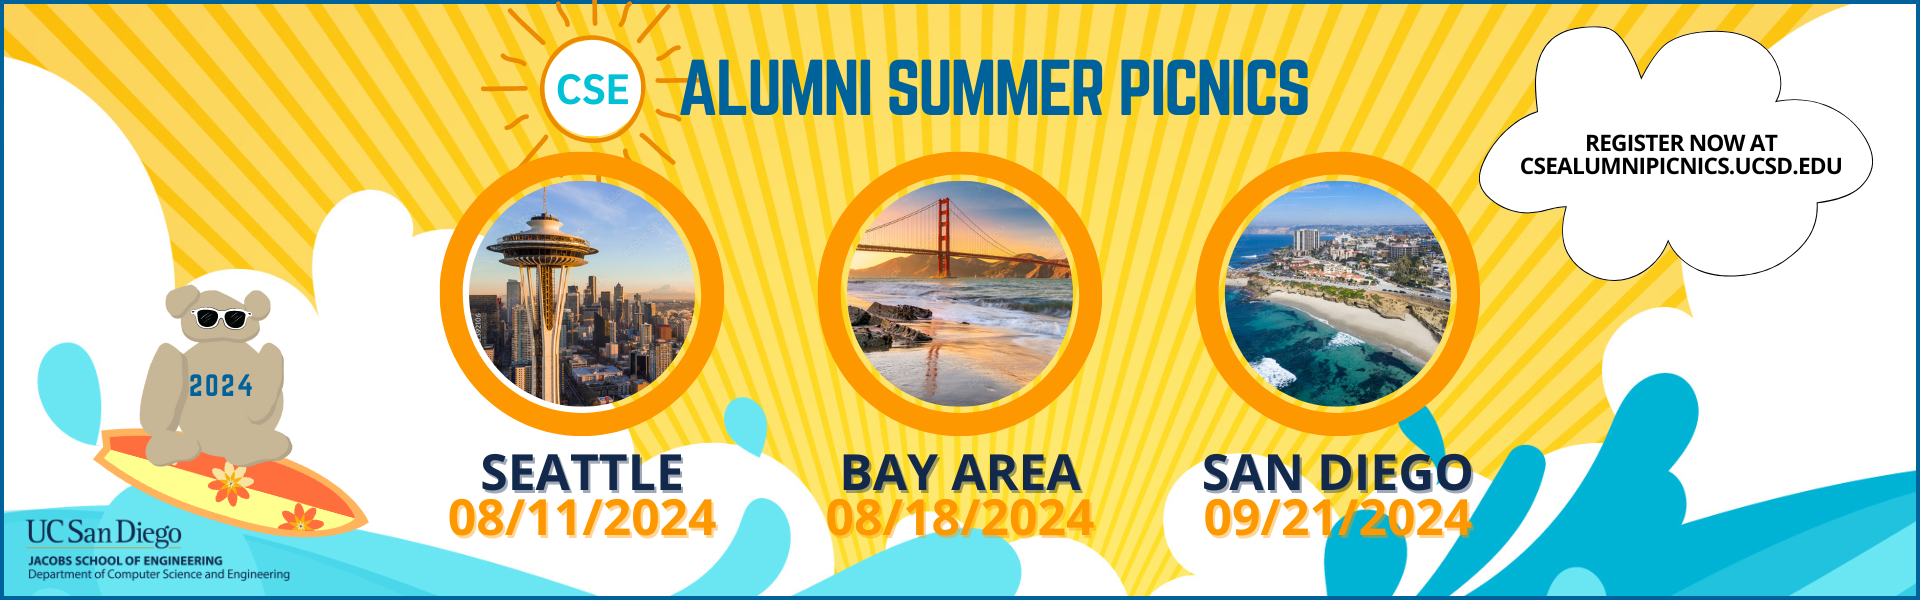 Alumni Picnics in Seattle (8/11/24), Bay Area (8/18/24) and San Diego (9/21/24)